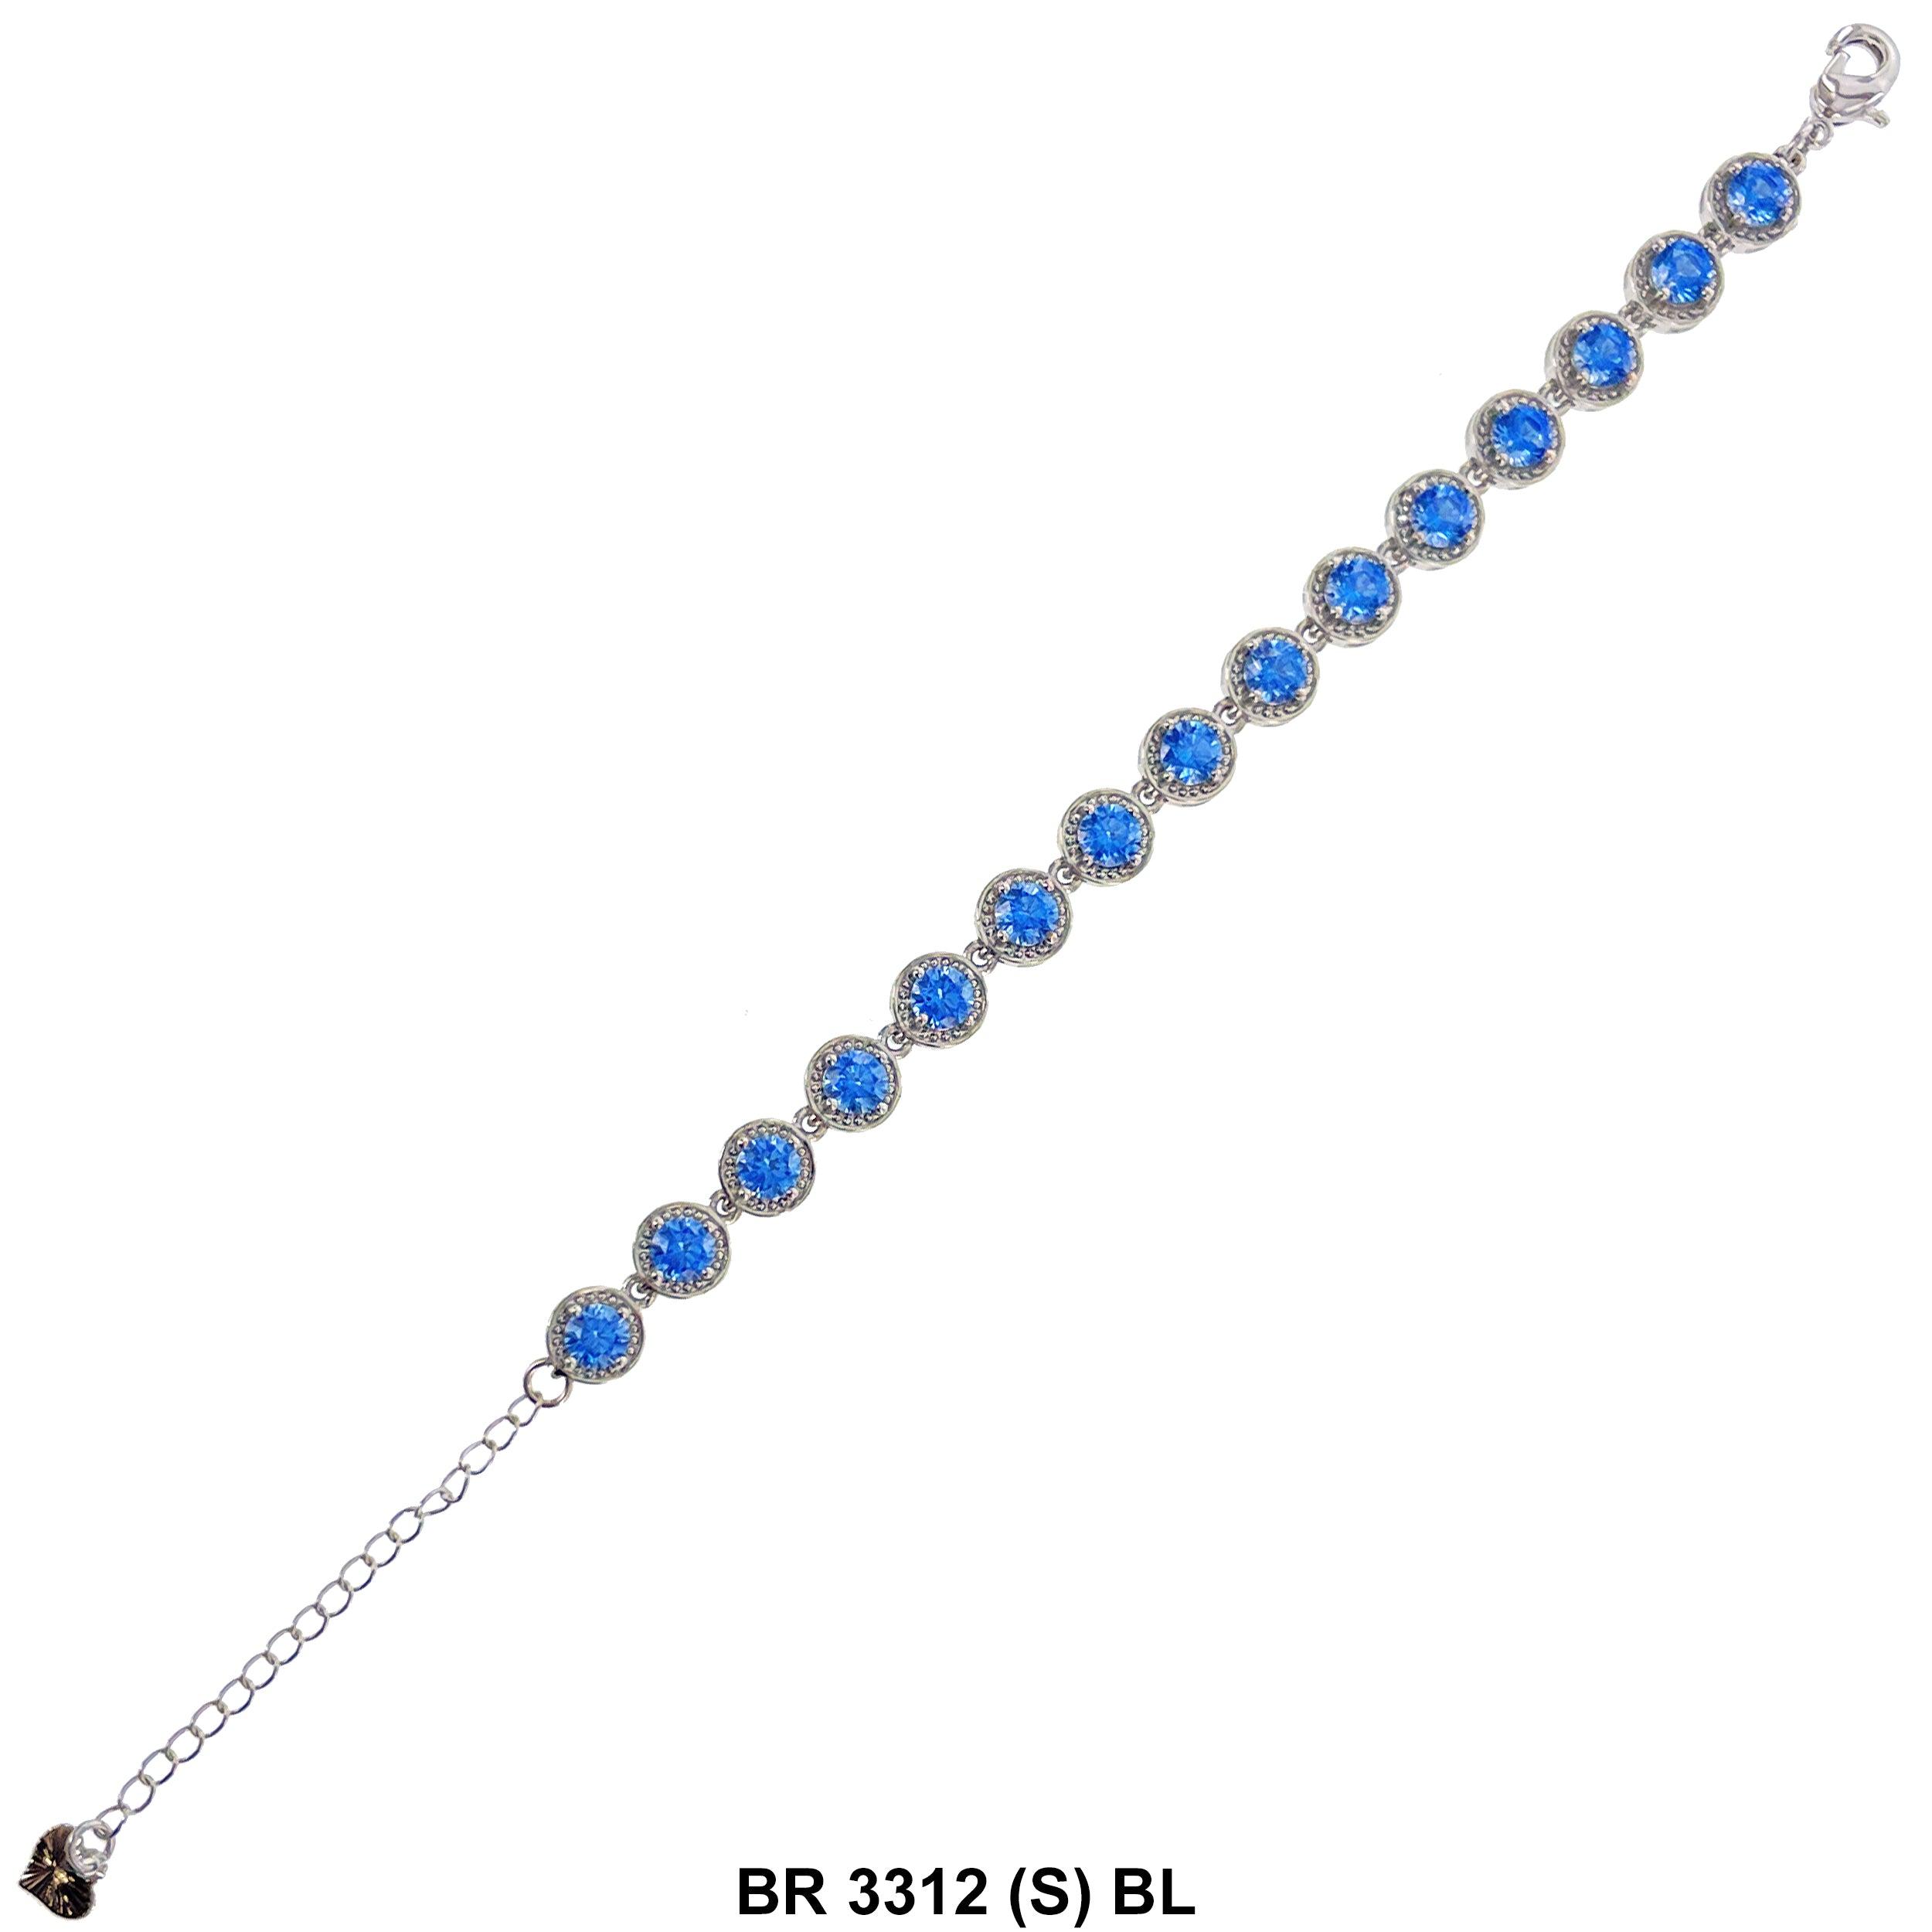 Cubic Zirconia Tennis Bracelet BR 3312 (S) BL